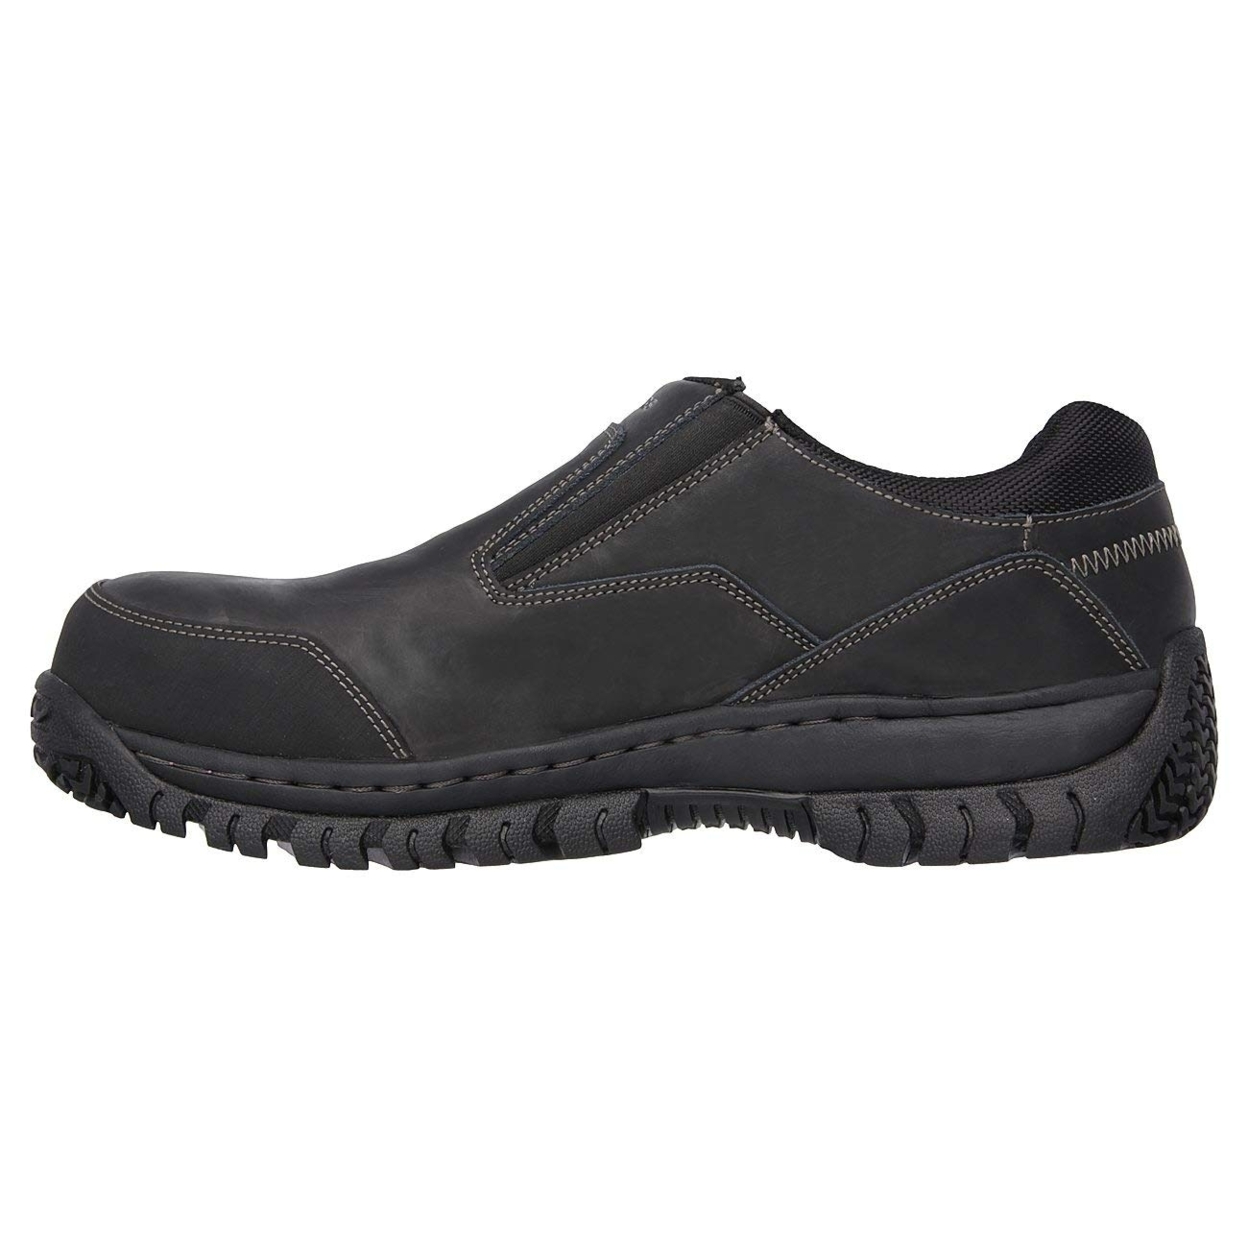 Skechers For Work Men's Hartan Steel Toe Slip-On Shoe Varies BLACK - BLACK, 8.5